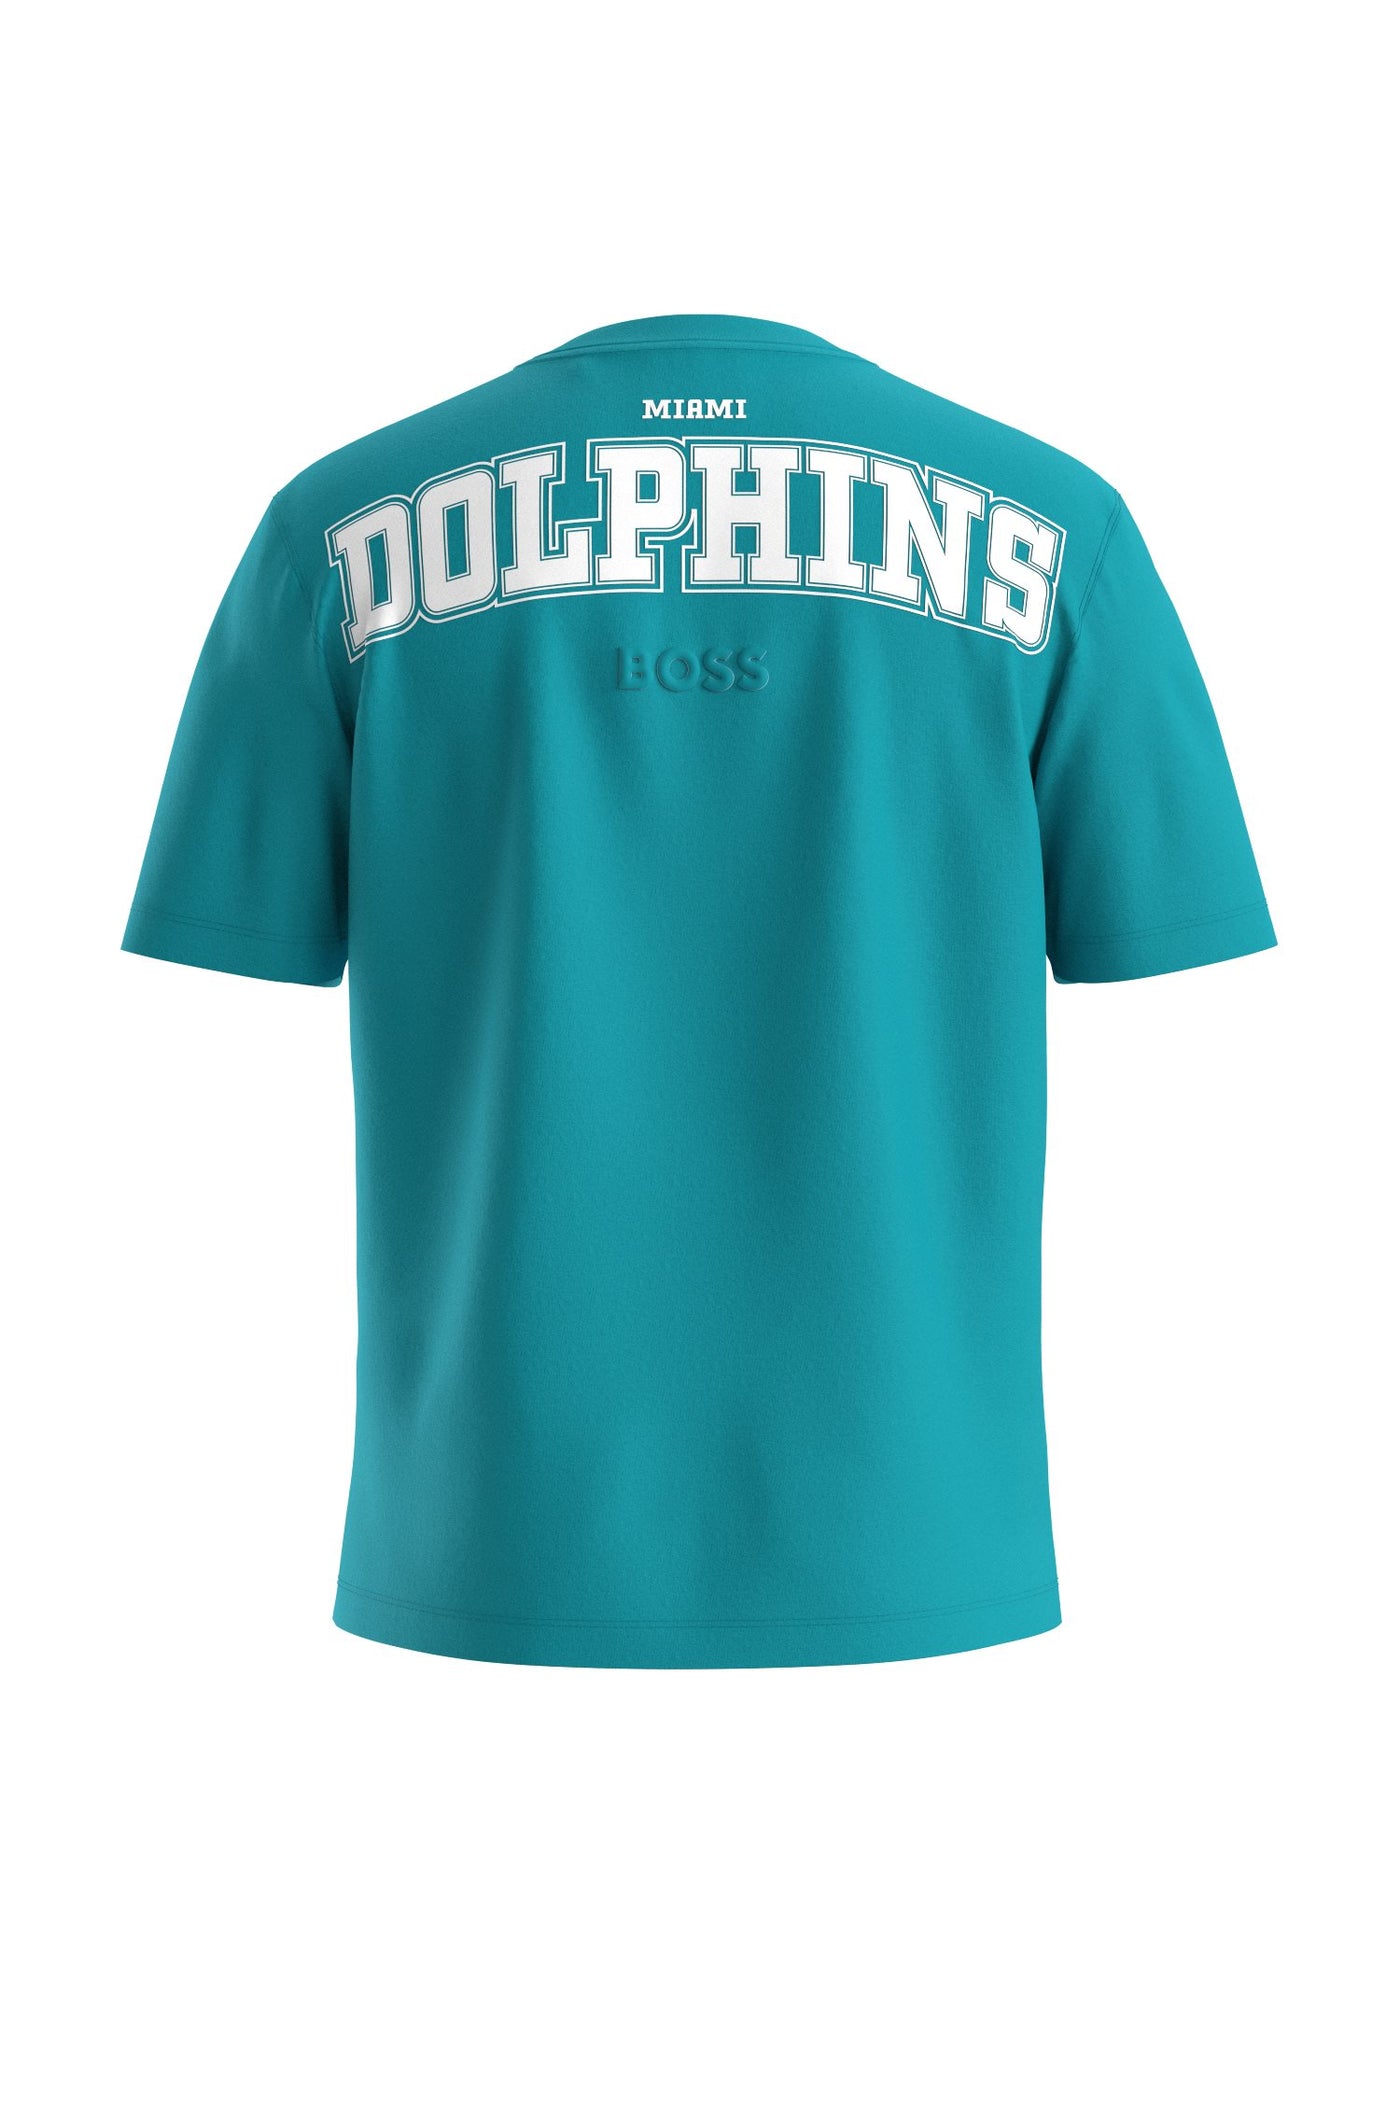 BOSS T Brady NFL T Shirt in Miami Dolphins Back